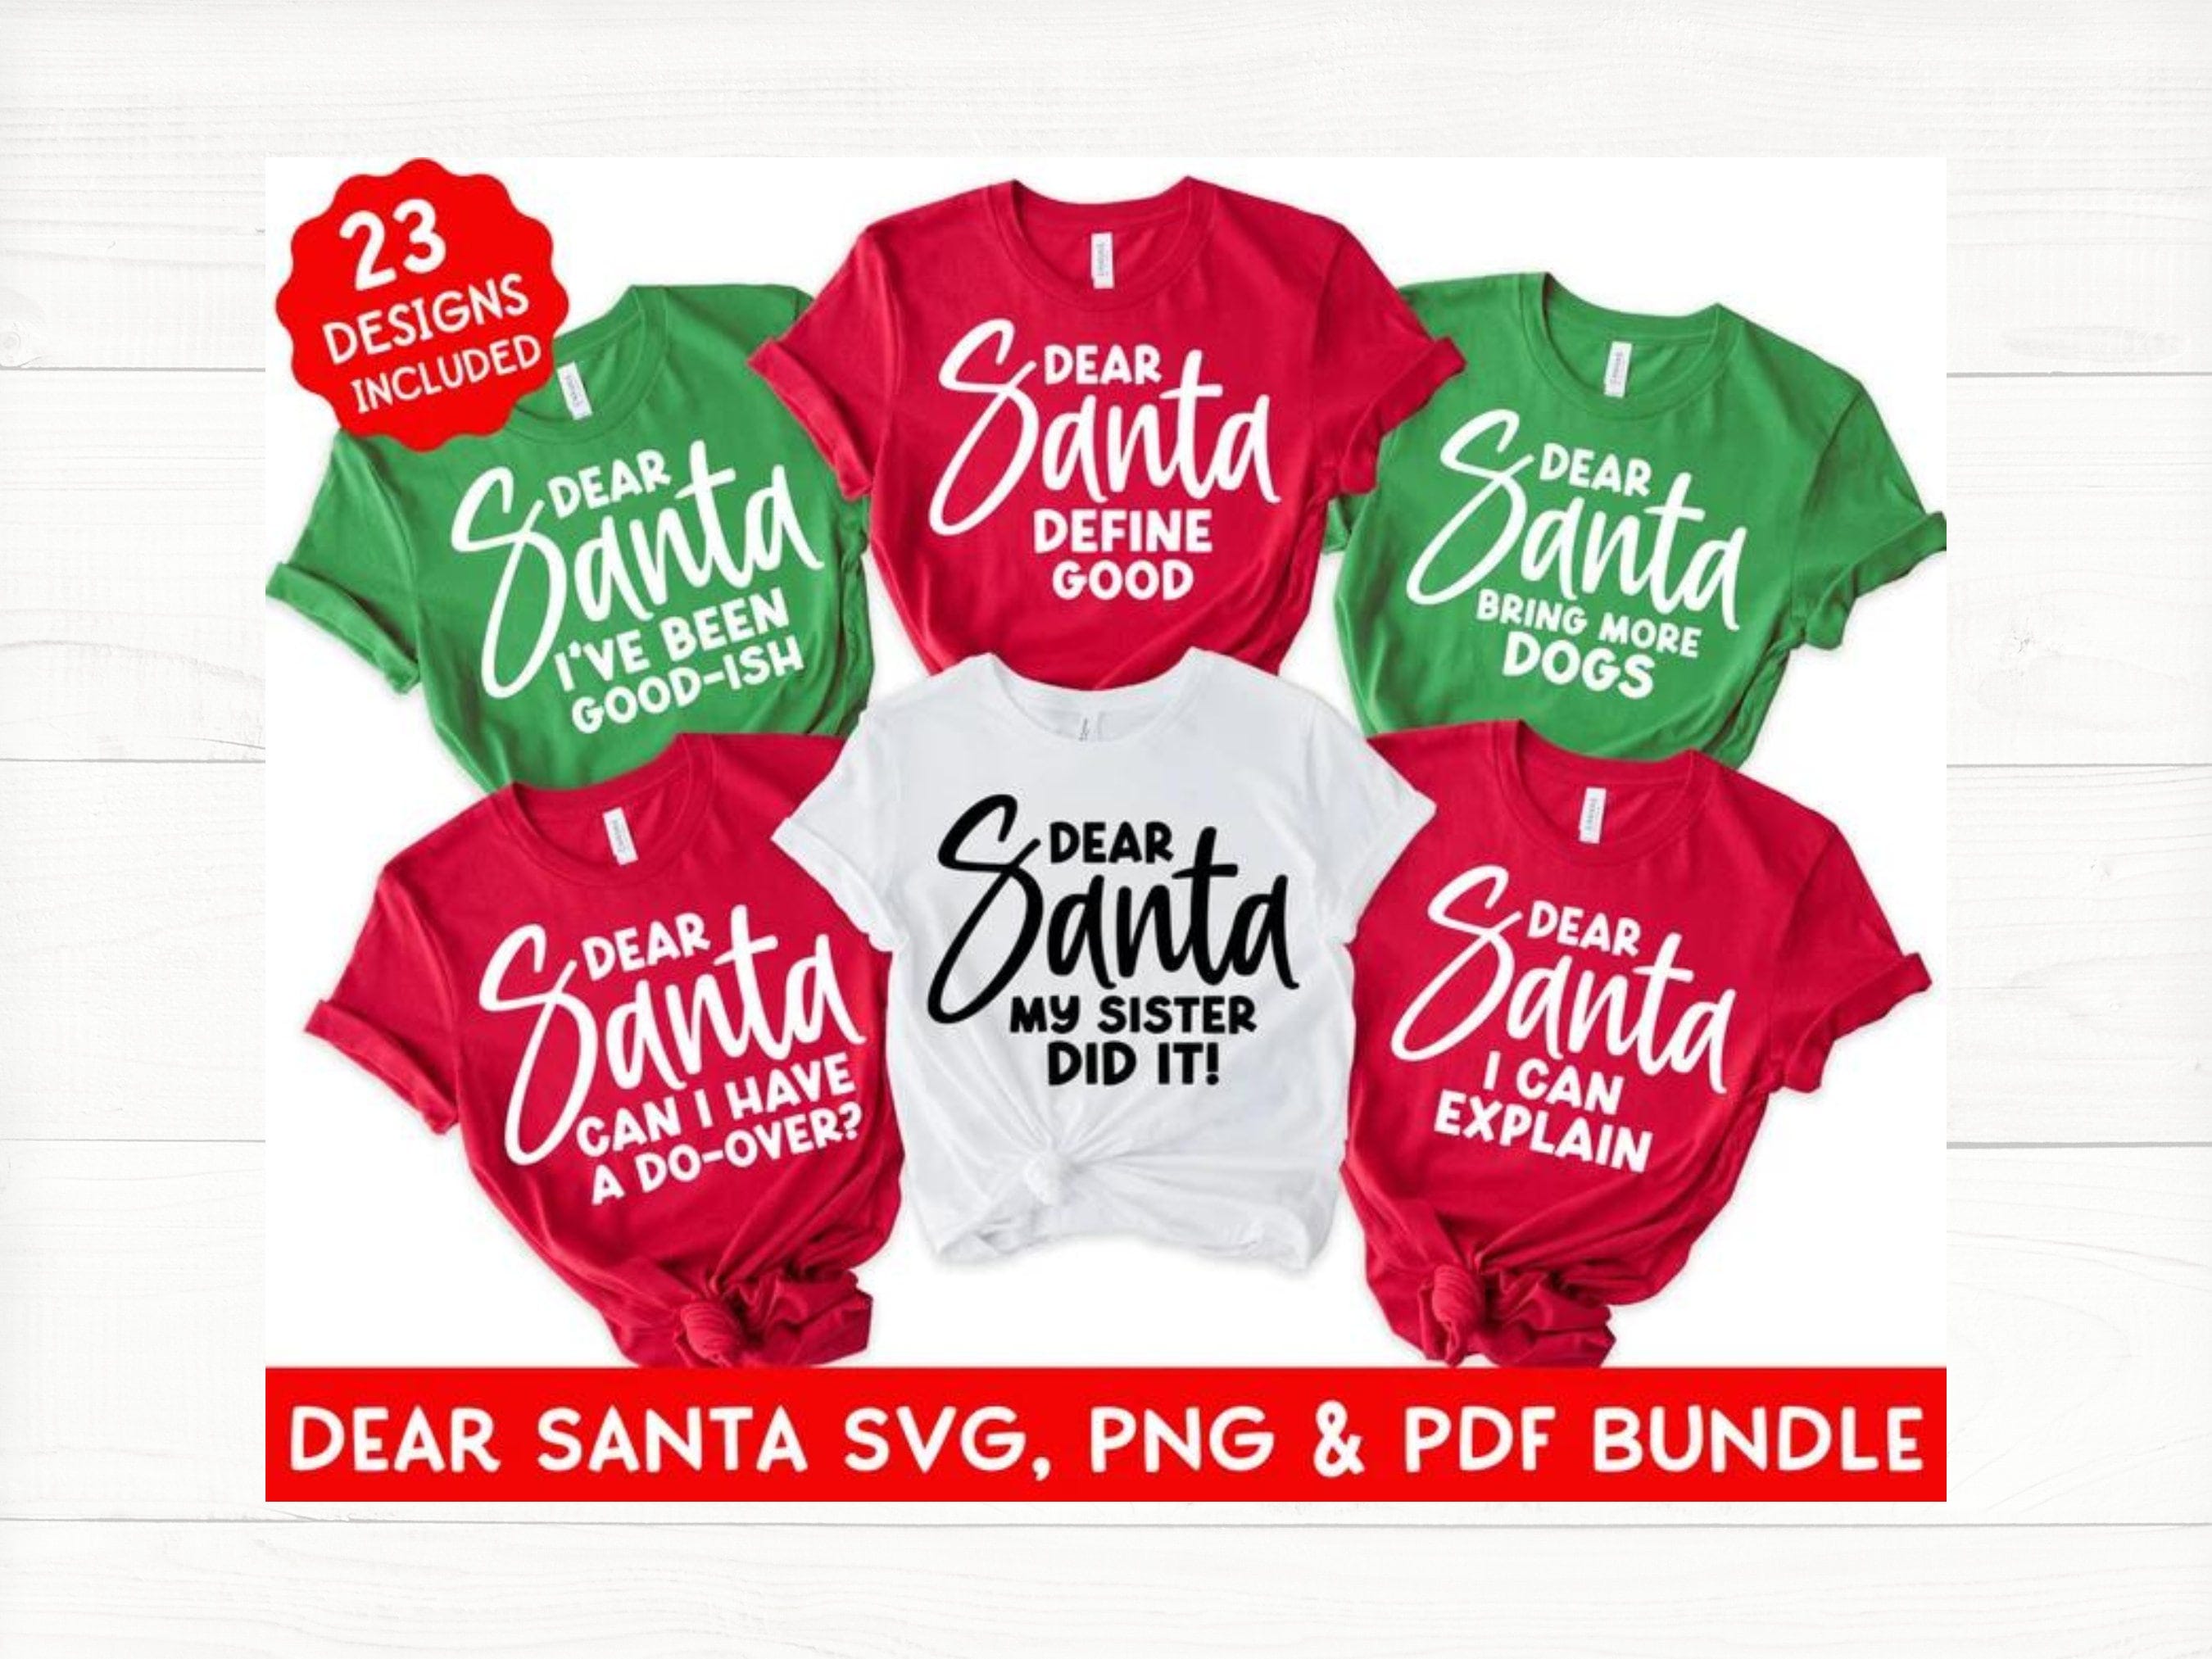 Dear Santa SVG PNG PDF Bundle, Family Christmas Shirt Svg, Funny Christmas Group Shirts, Matching Christmas Shirts Svg, Sibling Christmas